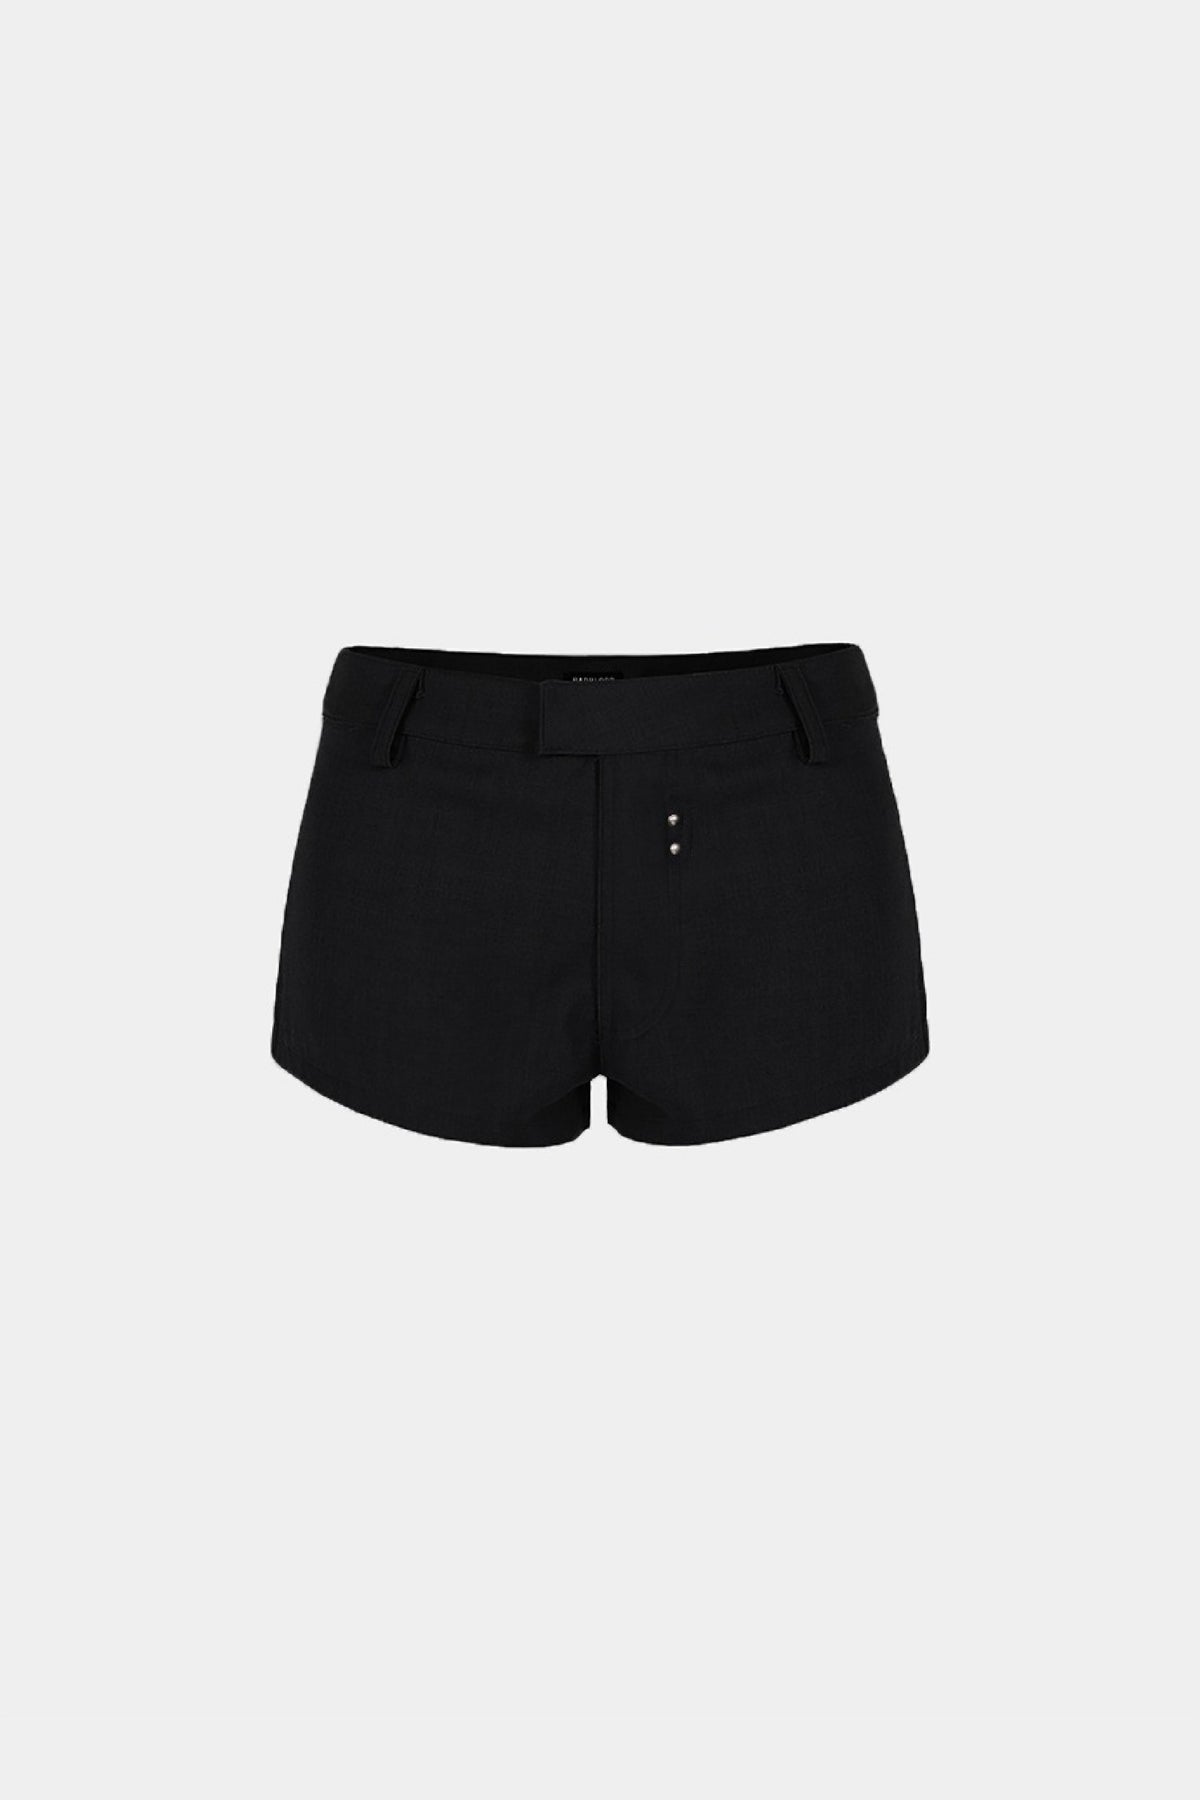 Badblood Proto Gabardine Micro Shorts Black